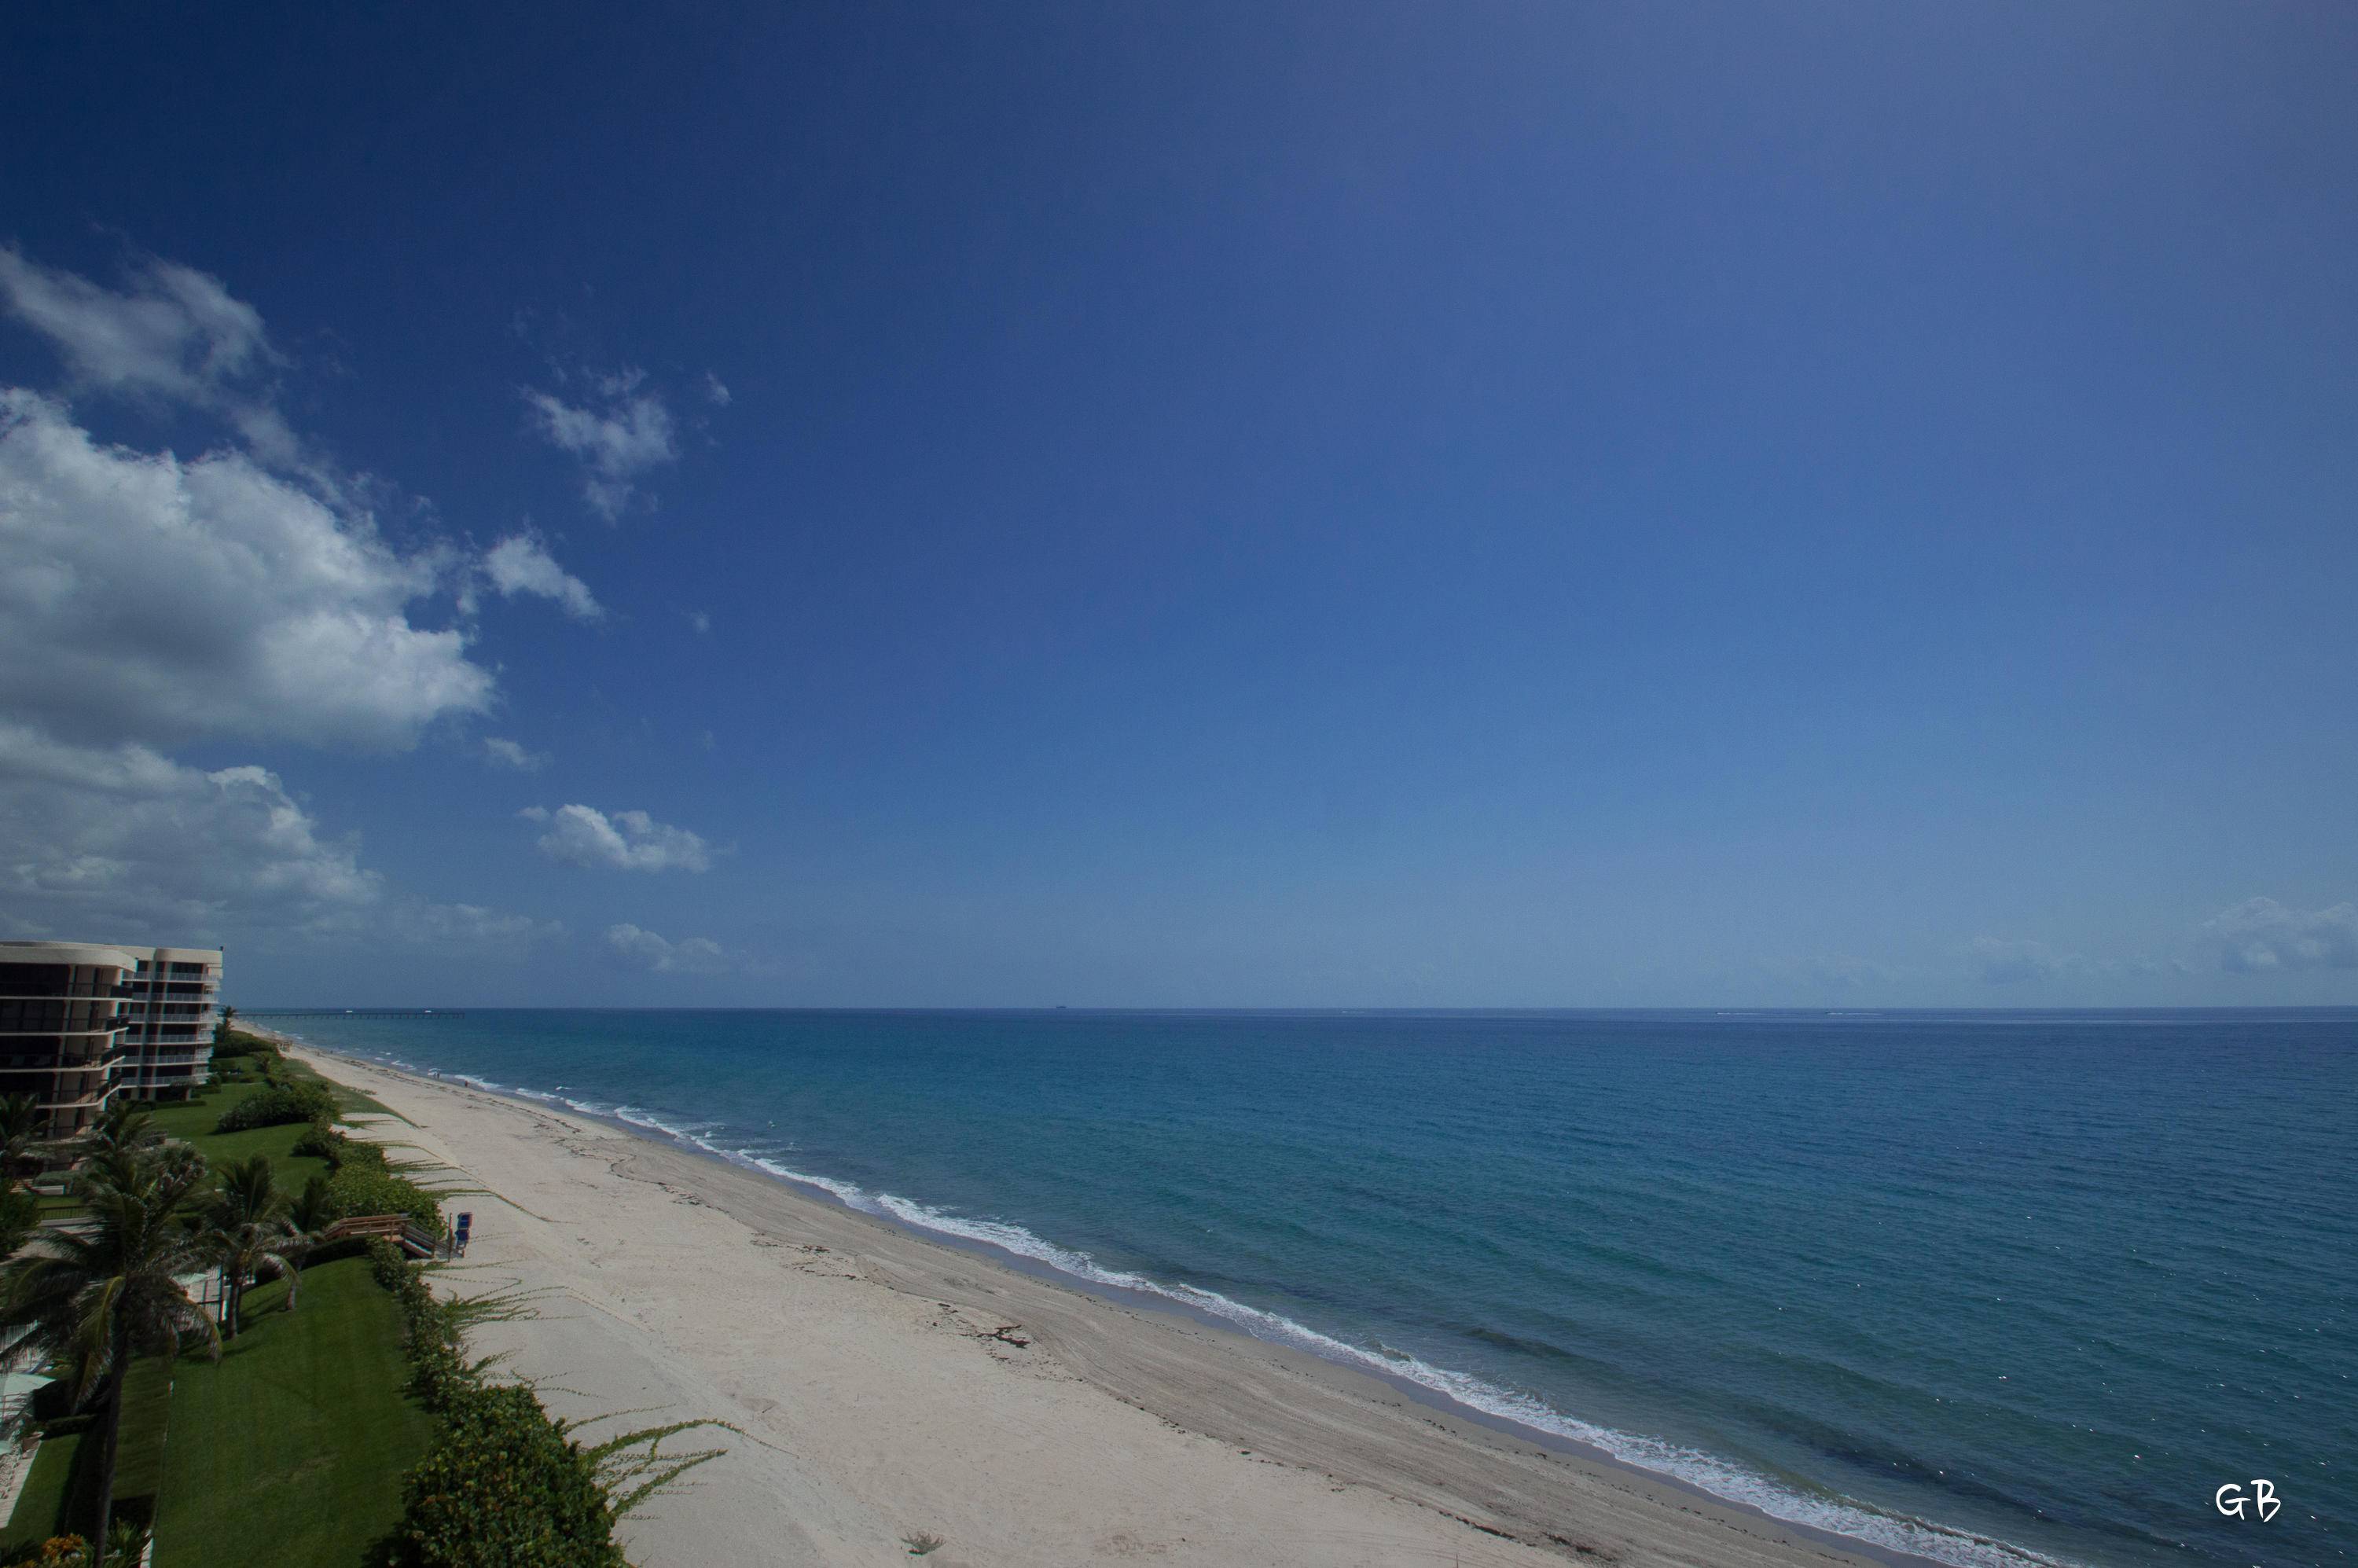 This 6 month seasonal rental offers Direct Oceanfront NE corner views.